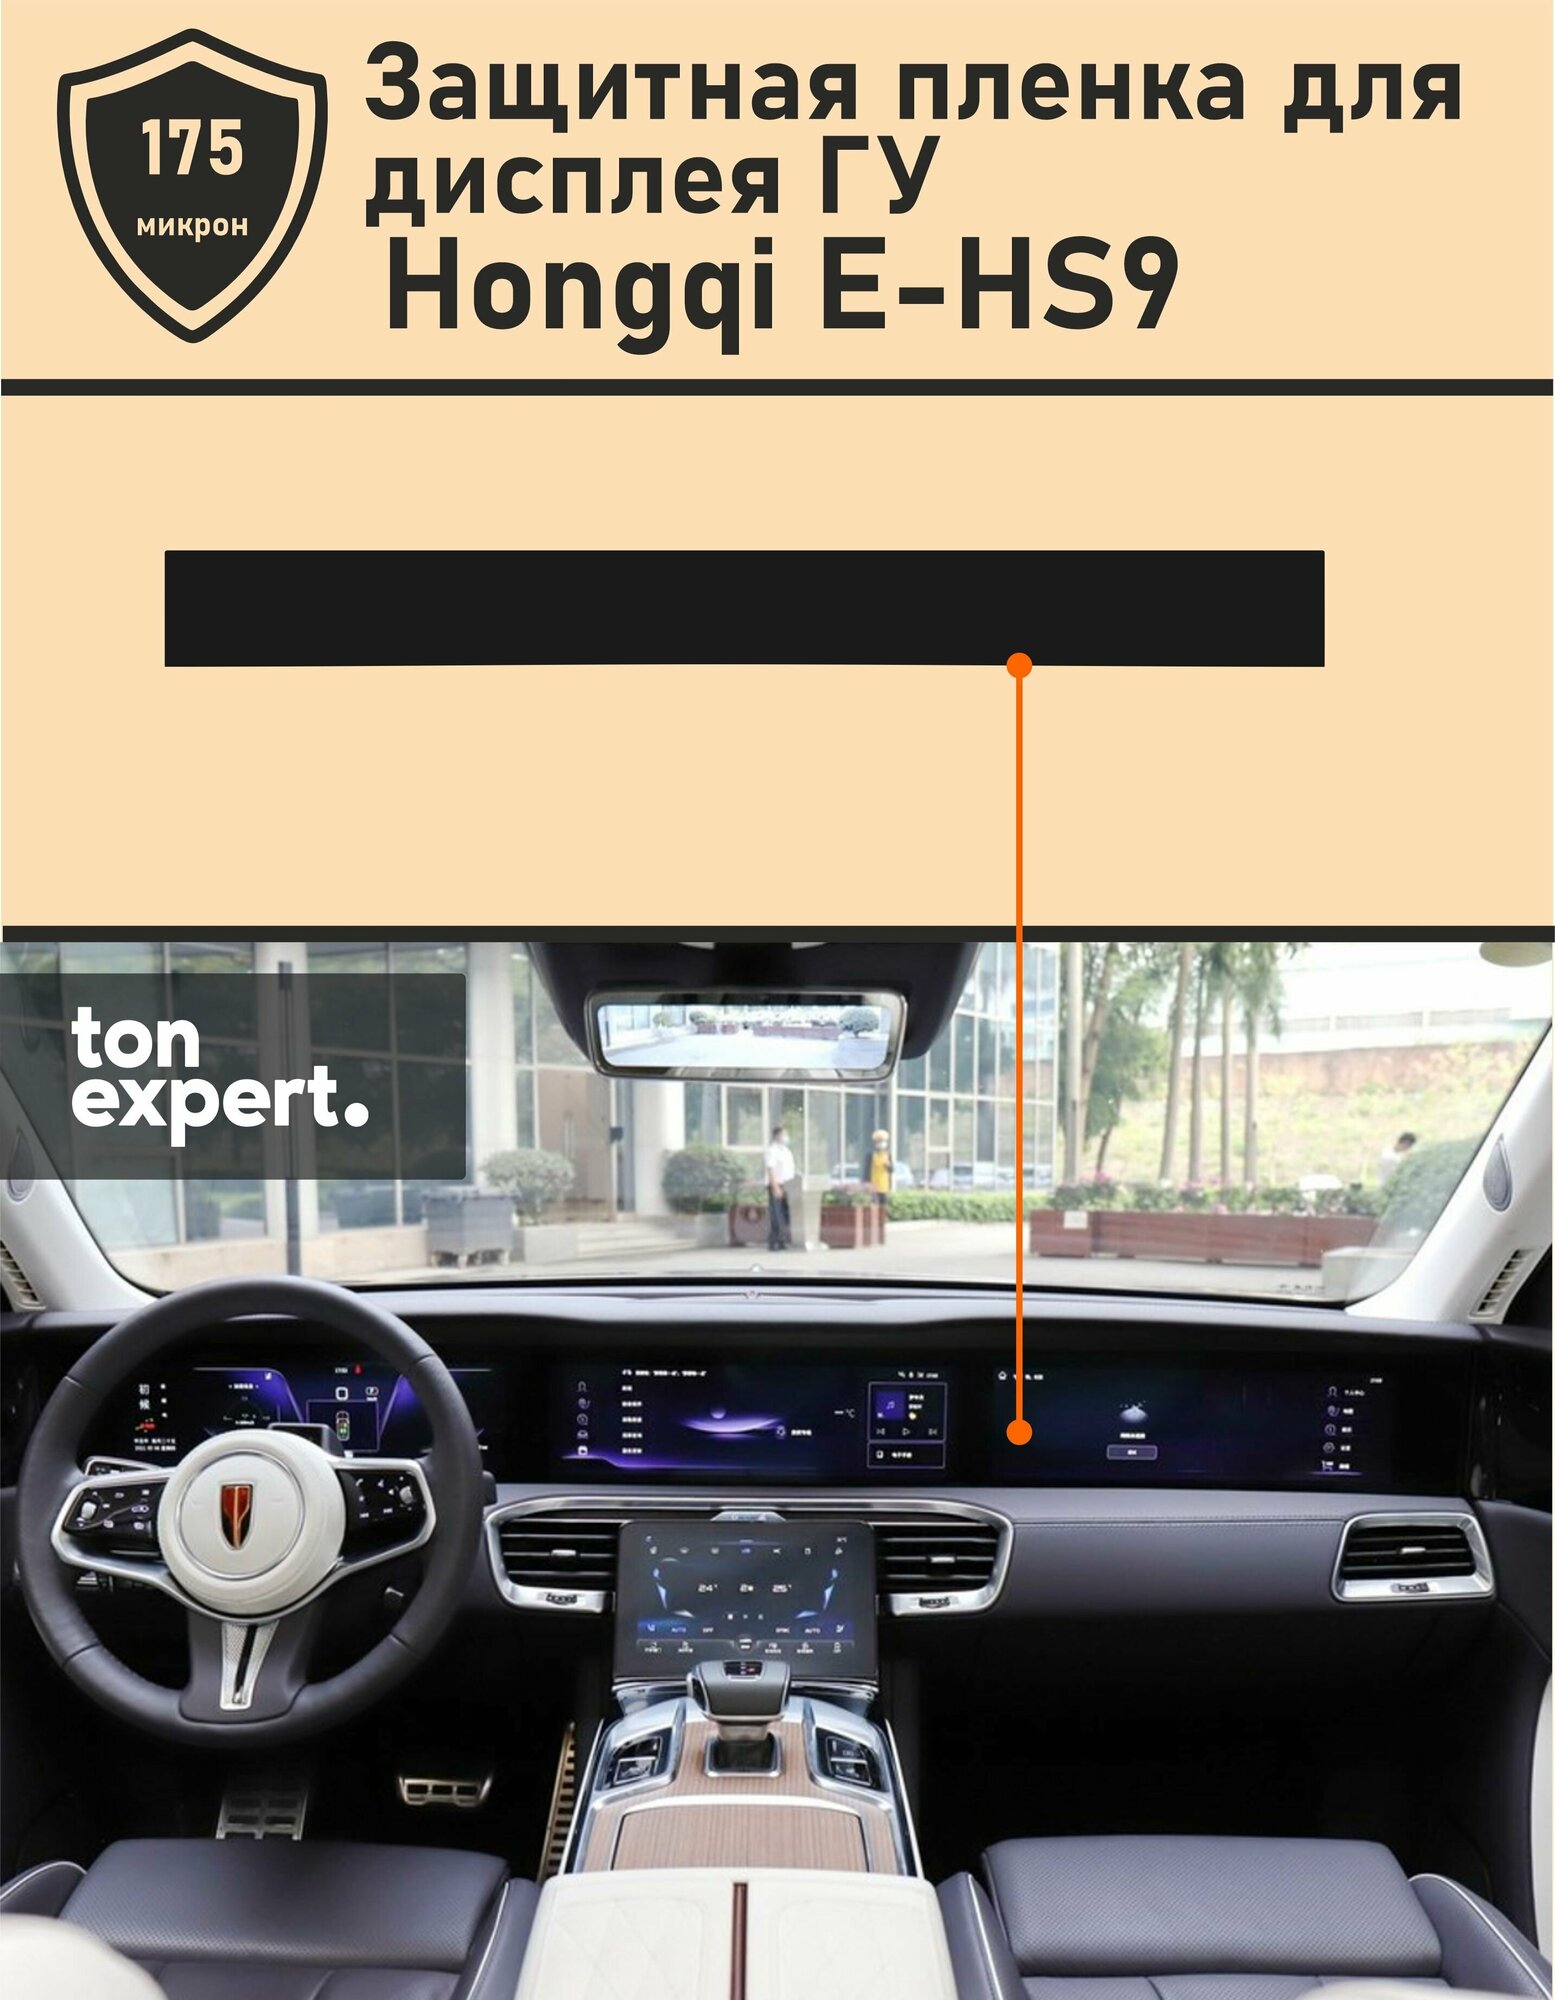 Hongqi E-HS9/Защитная пленка для дисплея ГУ